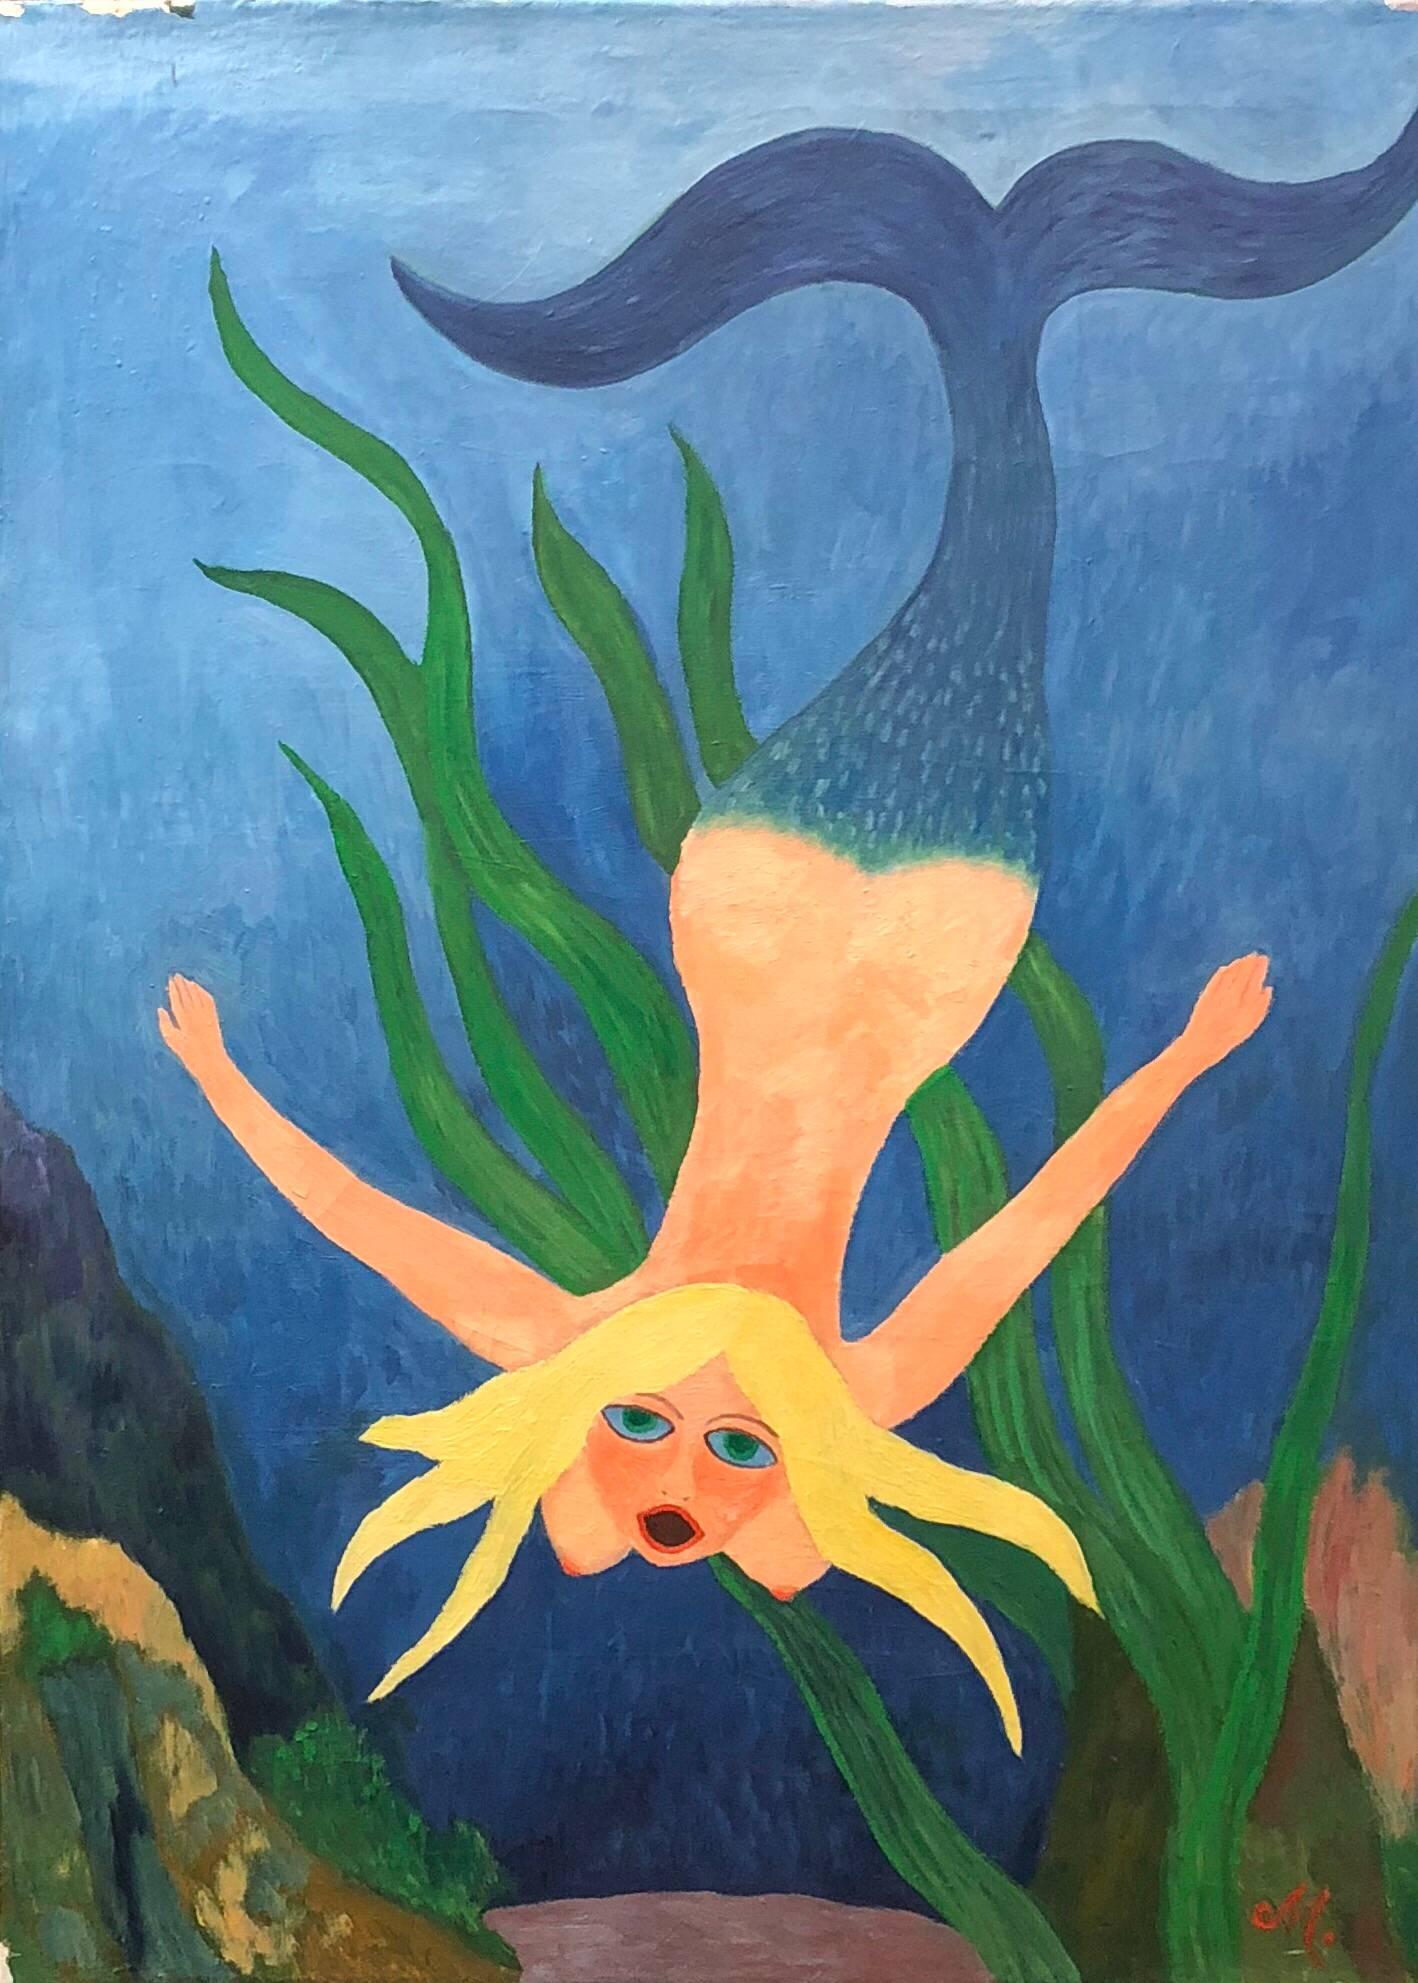 Akt Meerjungfrau unter Meer, deutsches Outsider-Volkskunst-OIl-Gemälde